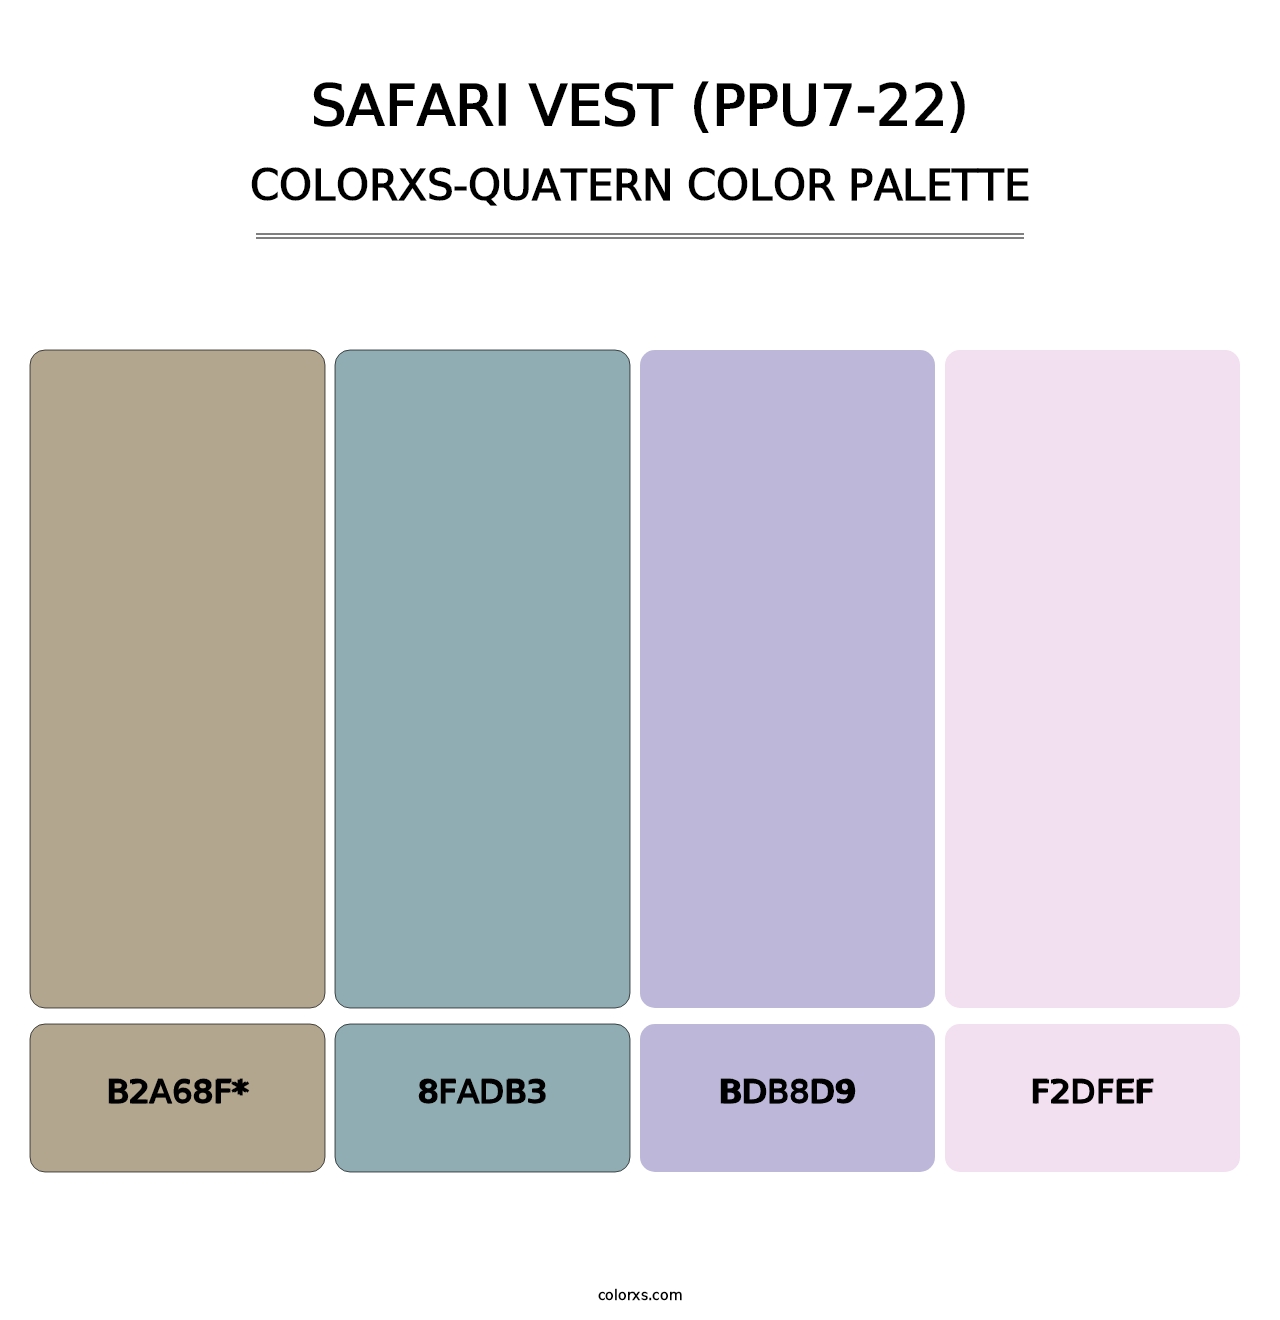 Safari Vest (PPU7-22) - Colorxs Quatern Palette